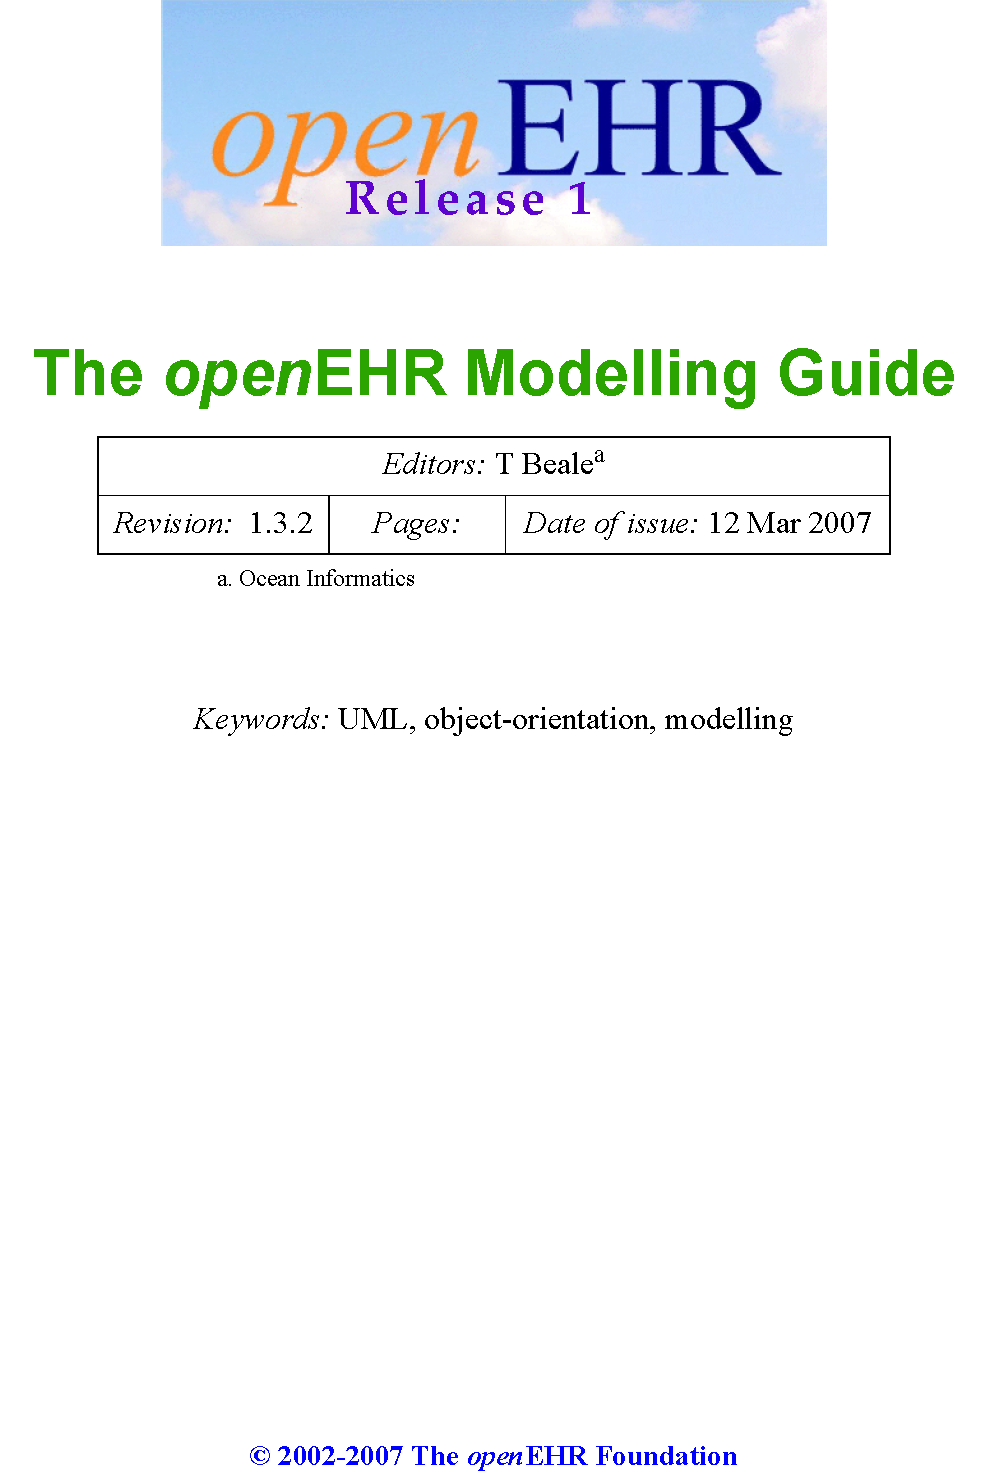 adl/trunk/pdf2html/modeling_guide/images/modelling_guide_img_1.png